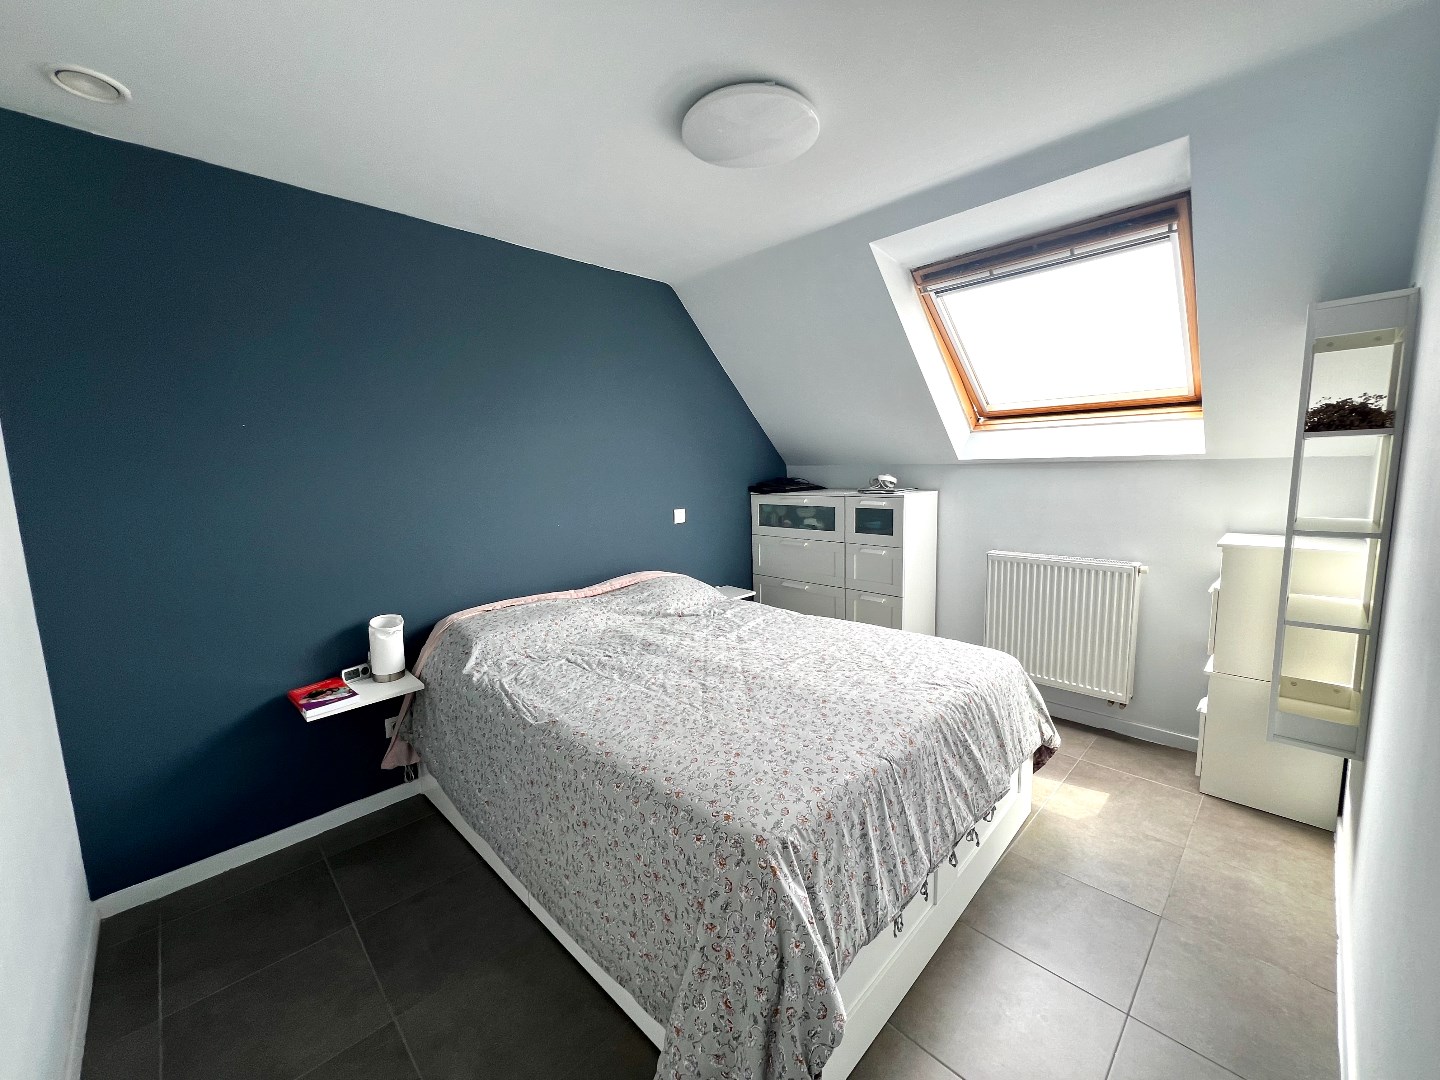 Instapklaar appartement met 2 slaapkamers, autostandplaats en kelderberging te koop te Harelbeke! foto 8